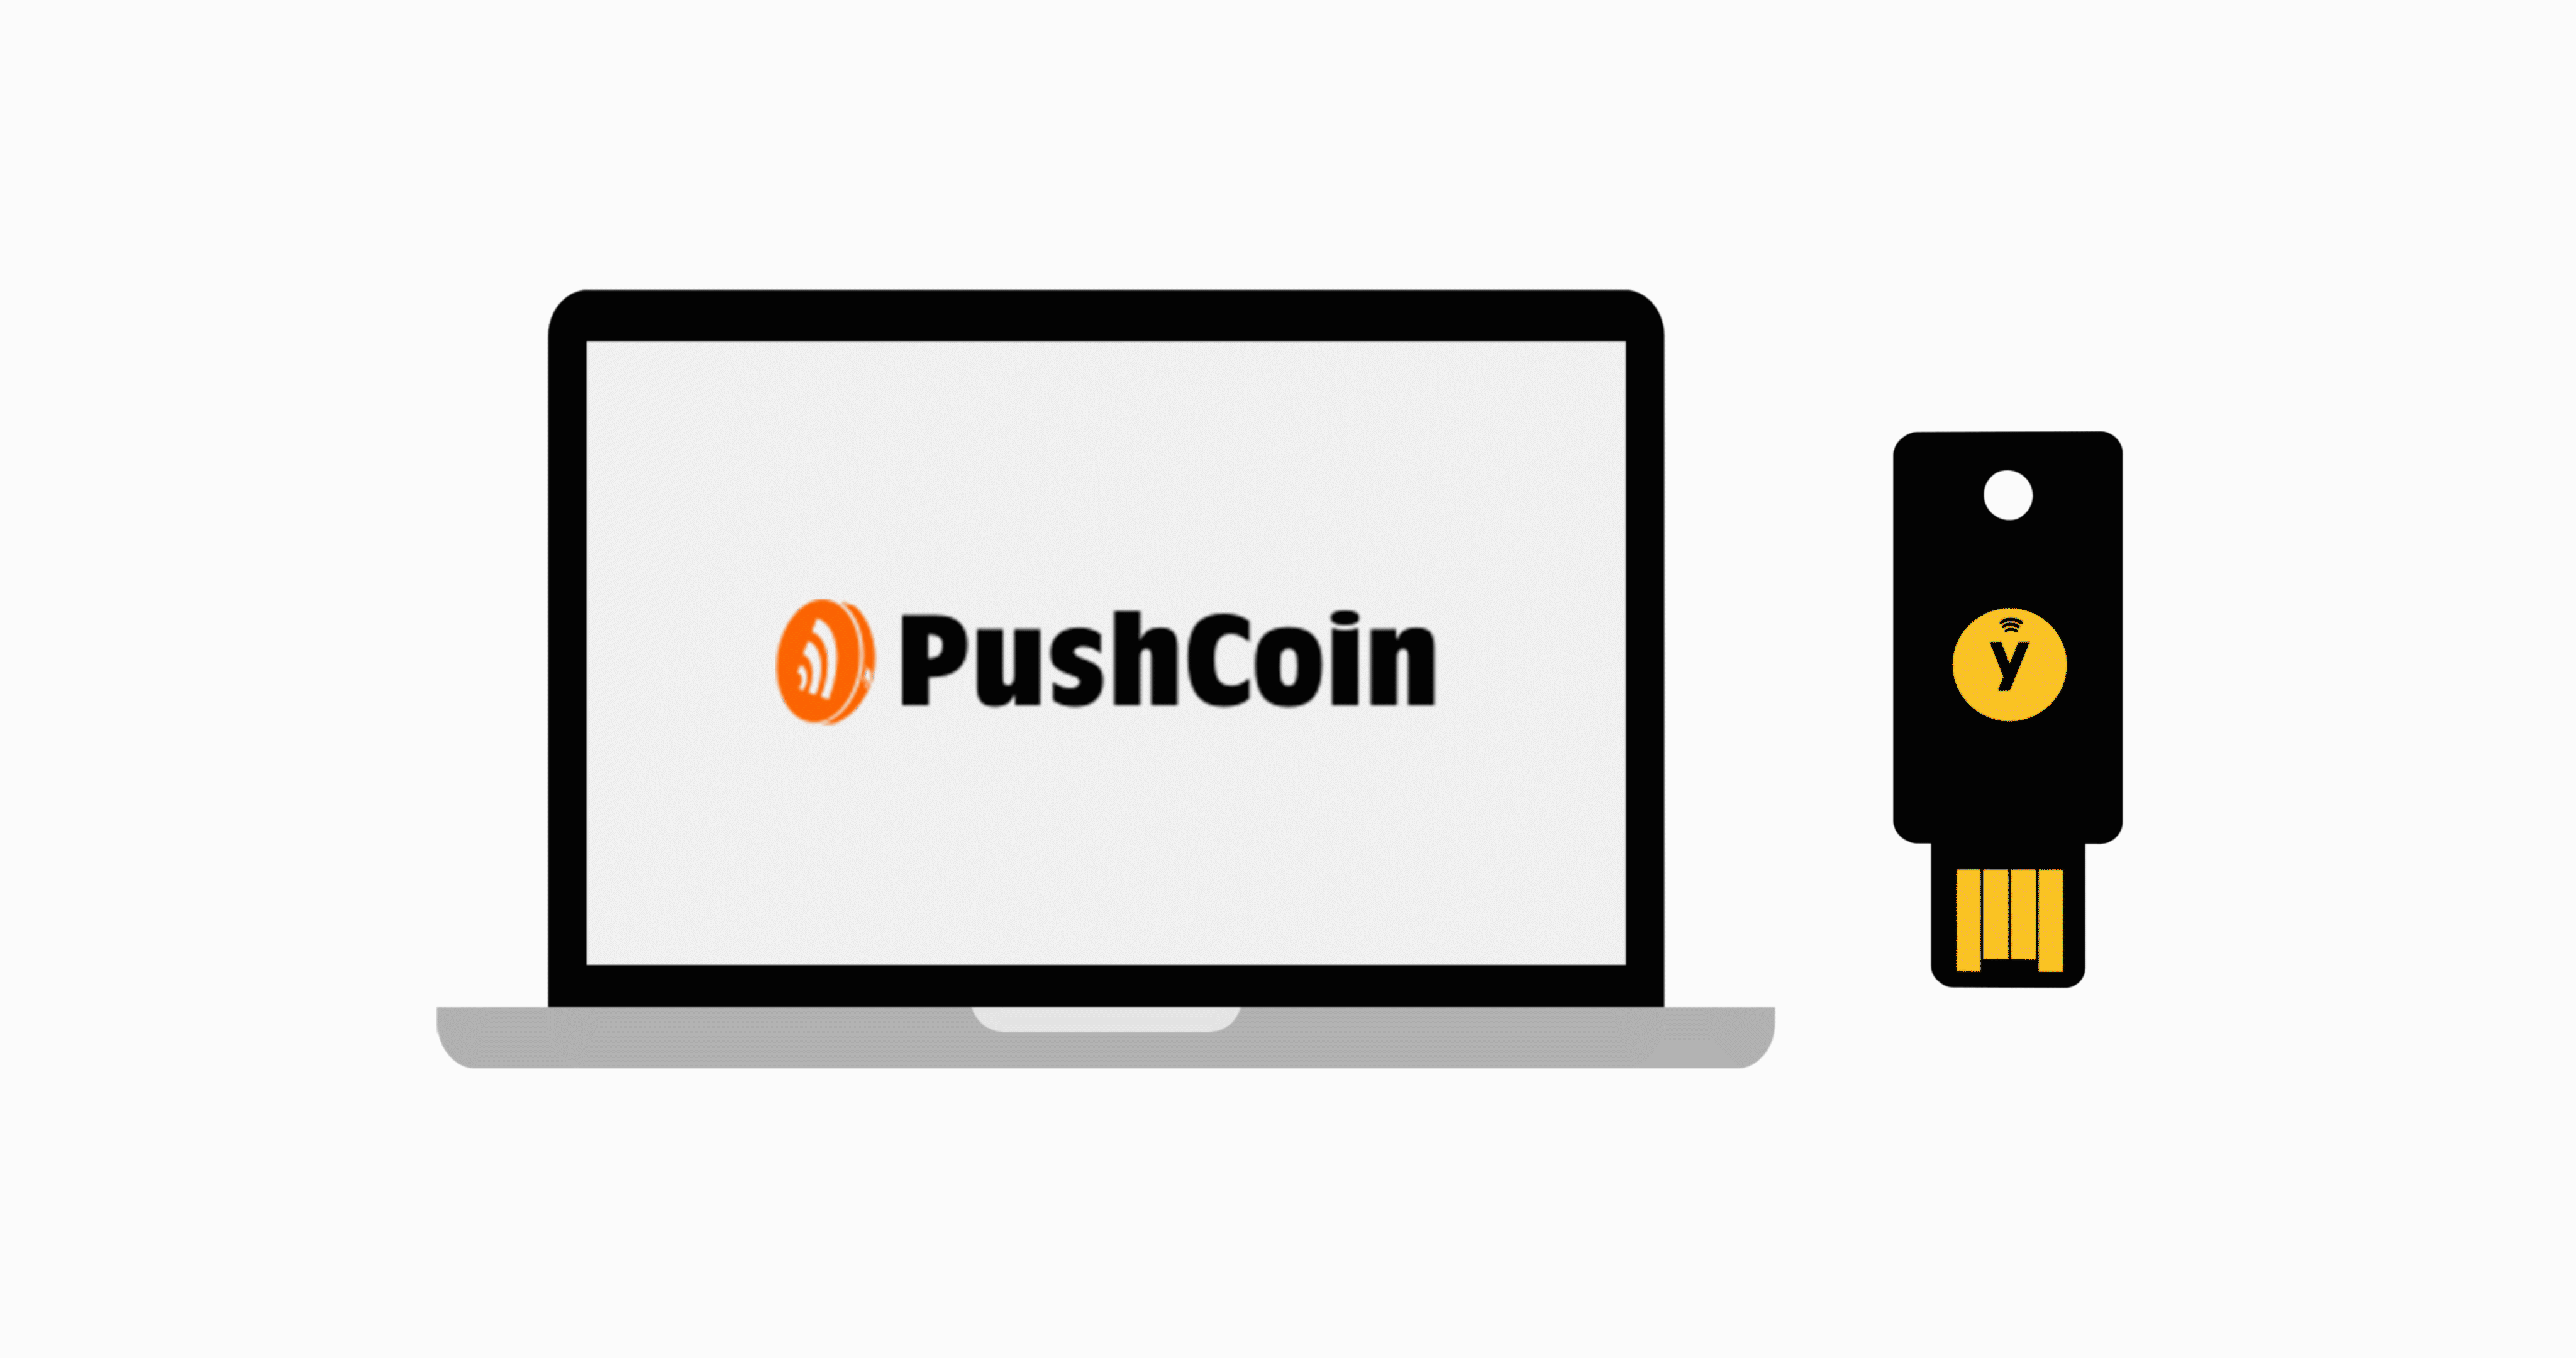 PushCoin main image